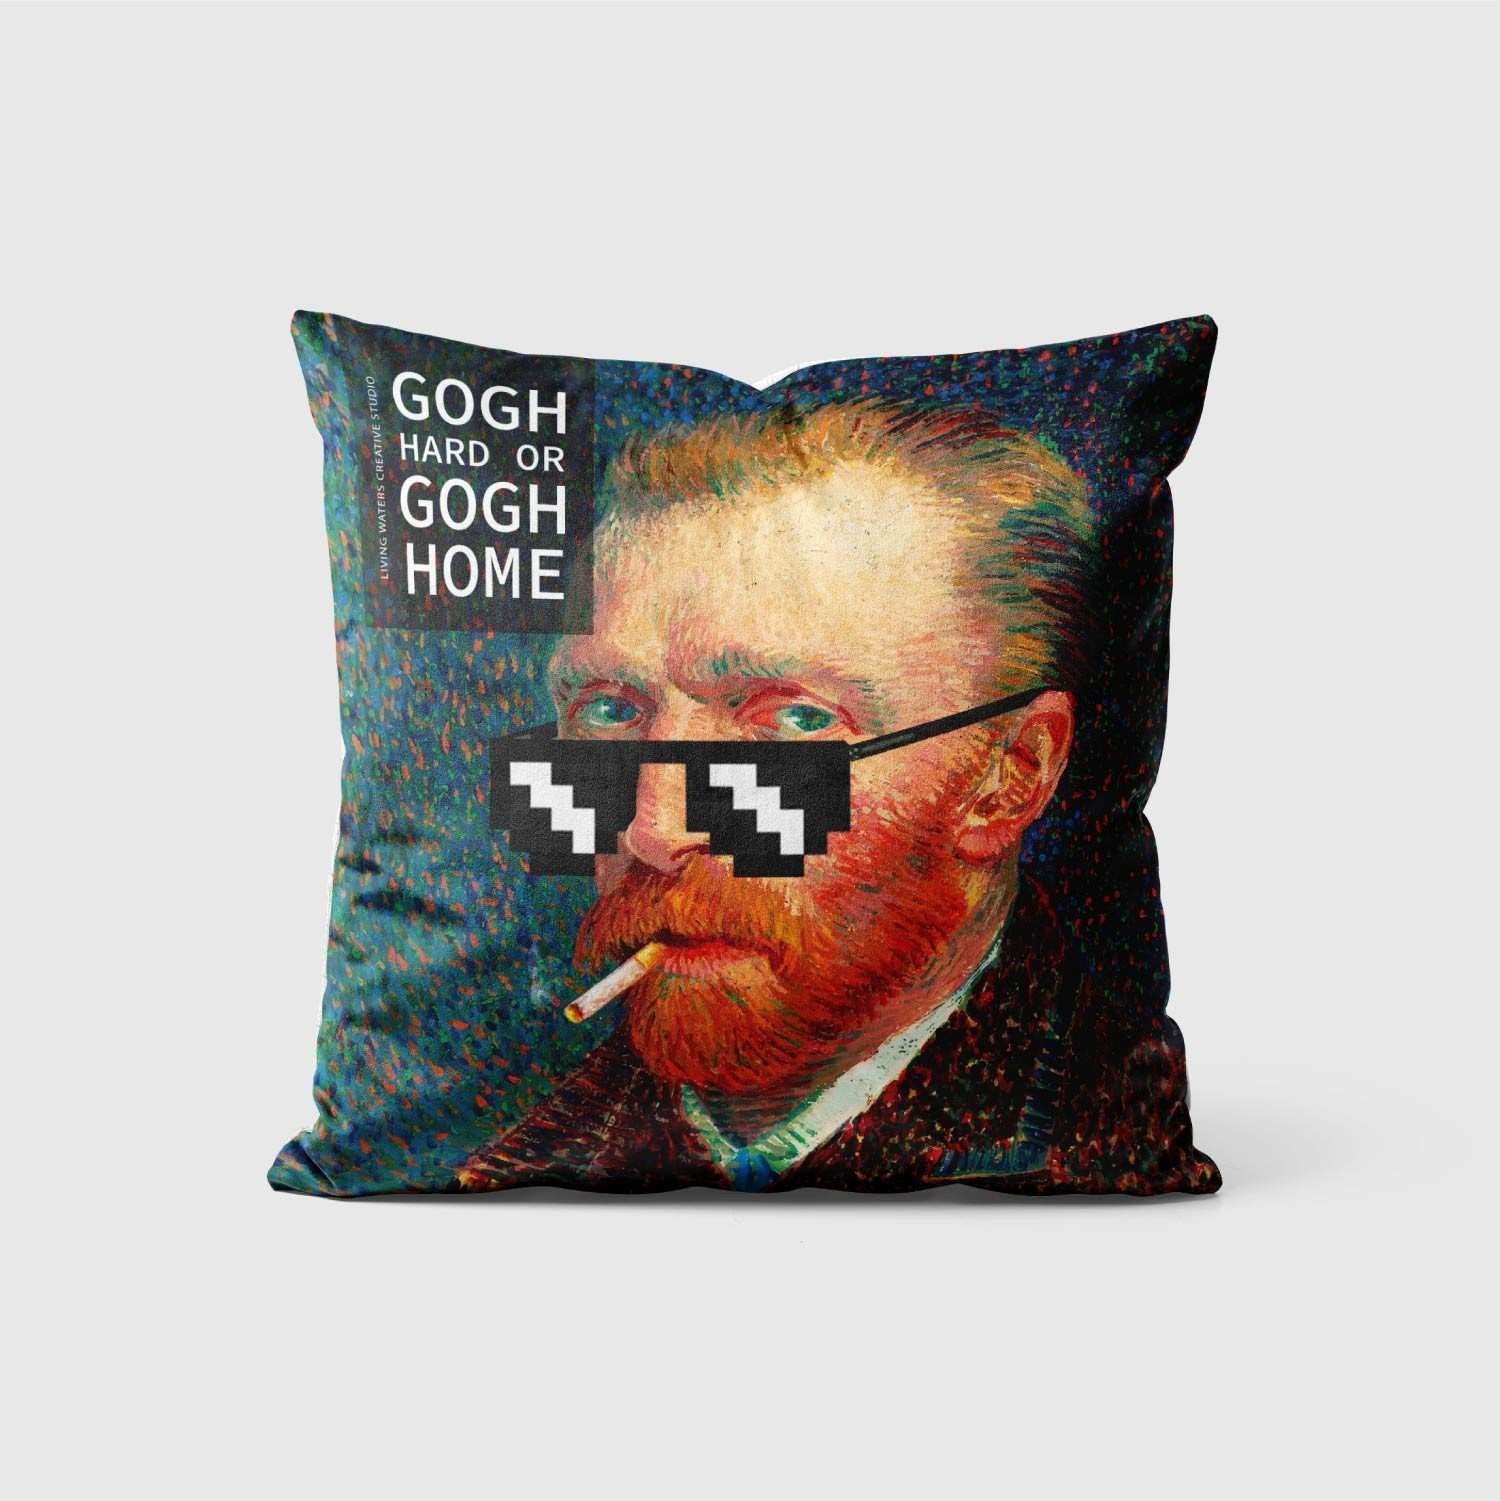 The Gogh Hard Cushion Cover